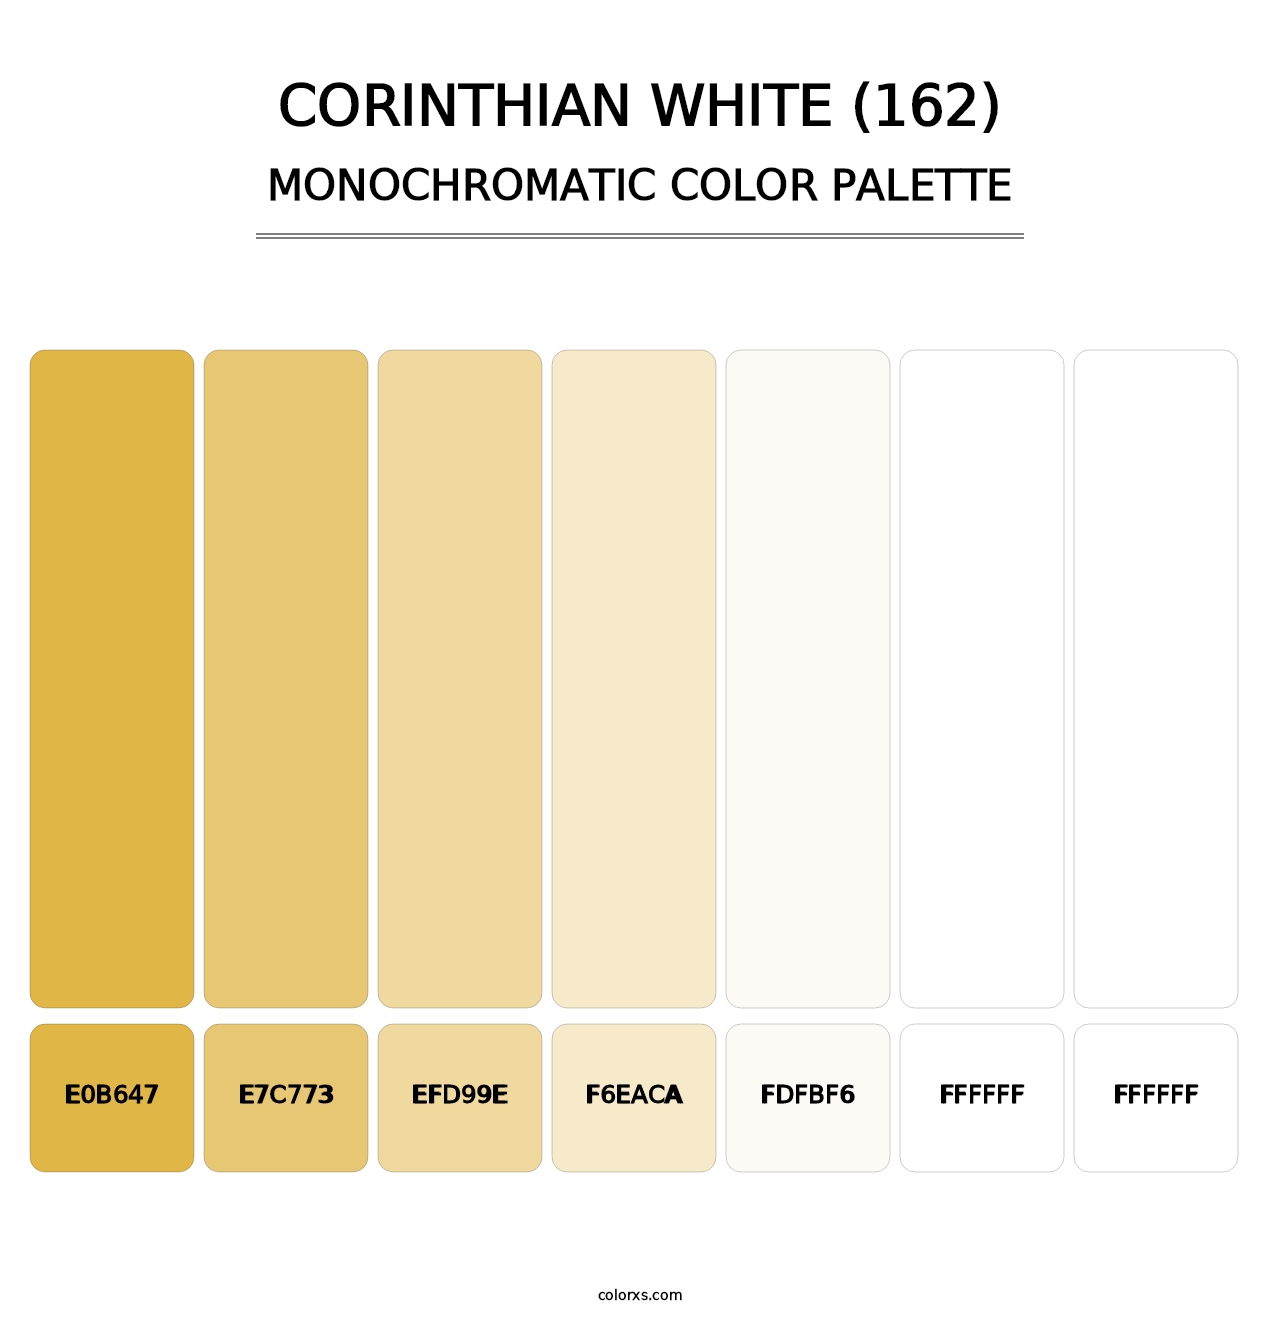 Corinthian White (162) - Monochromatic Color Palette